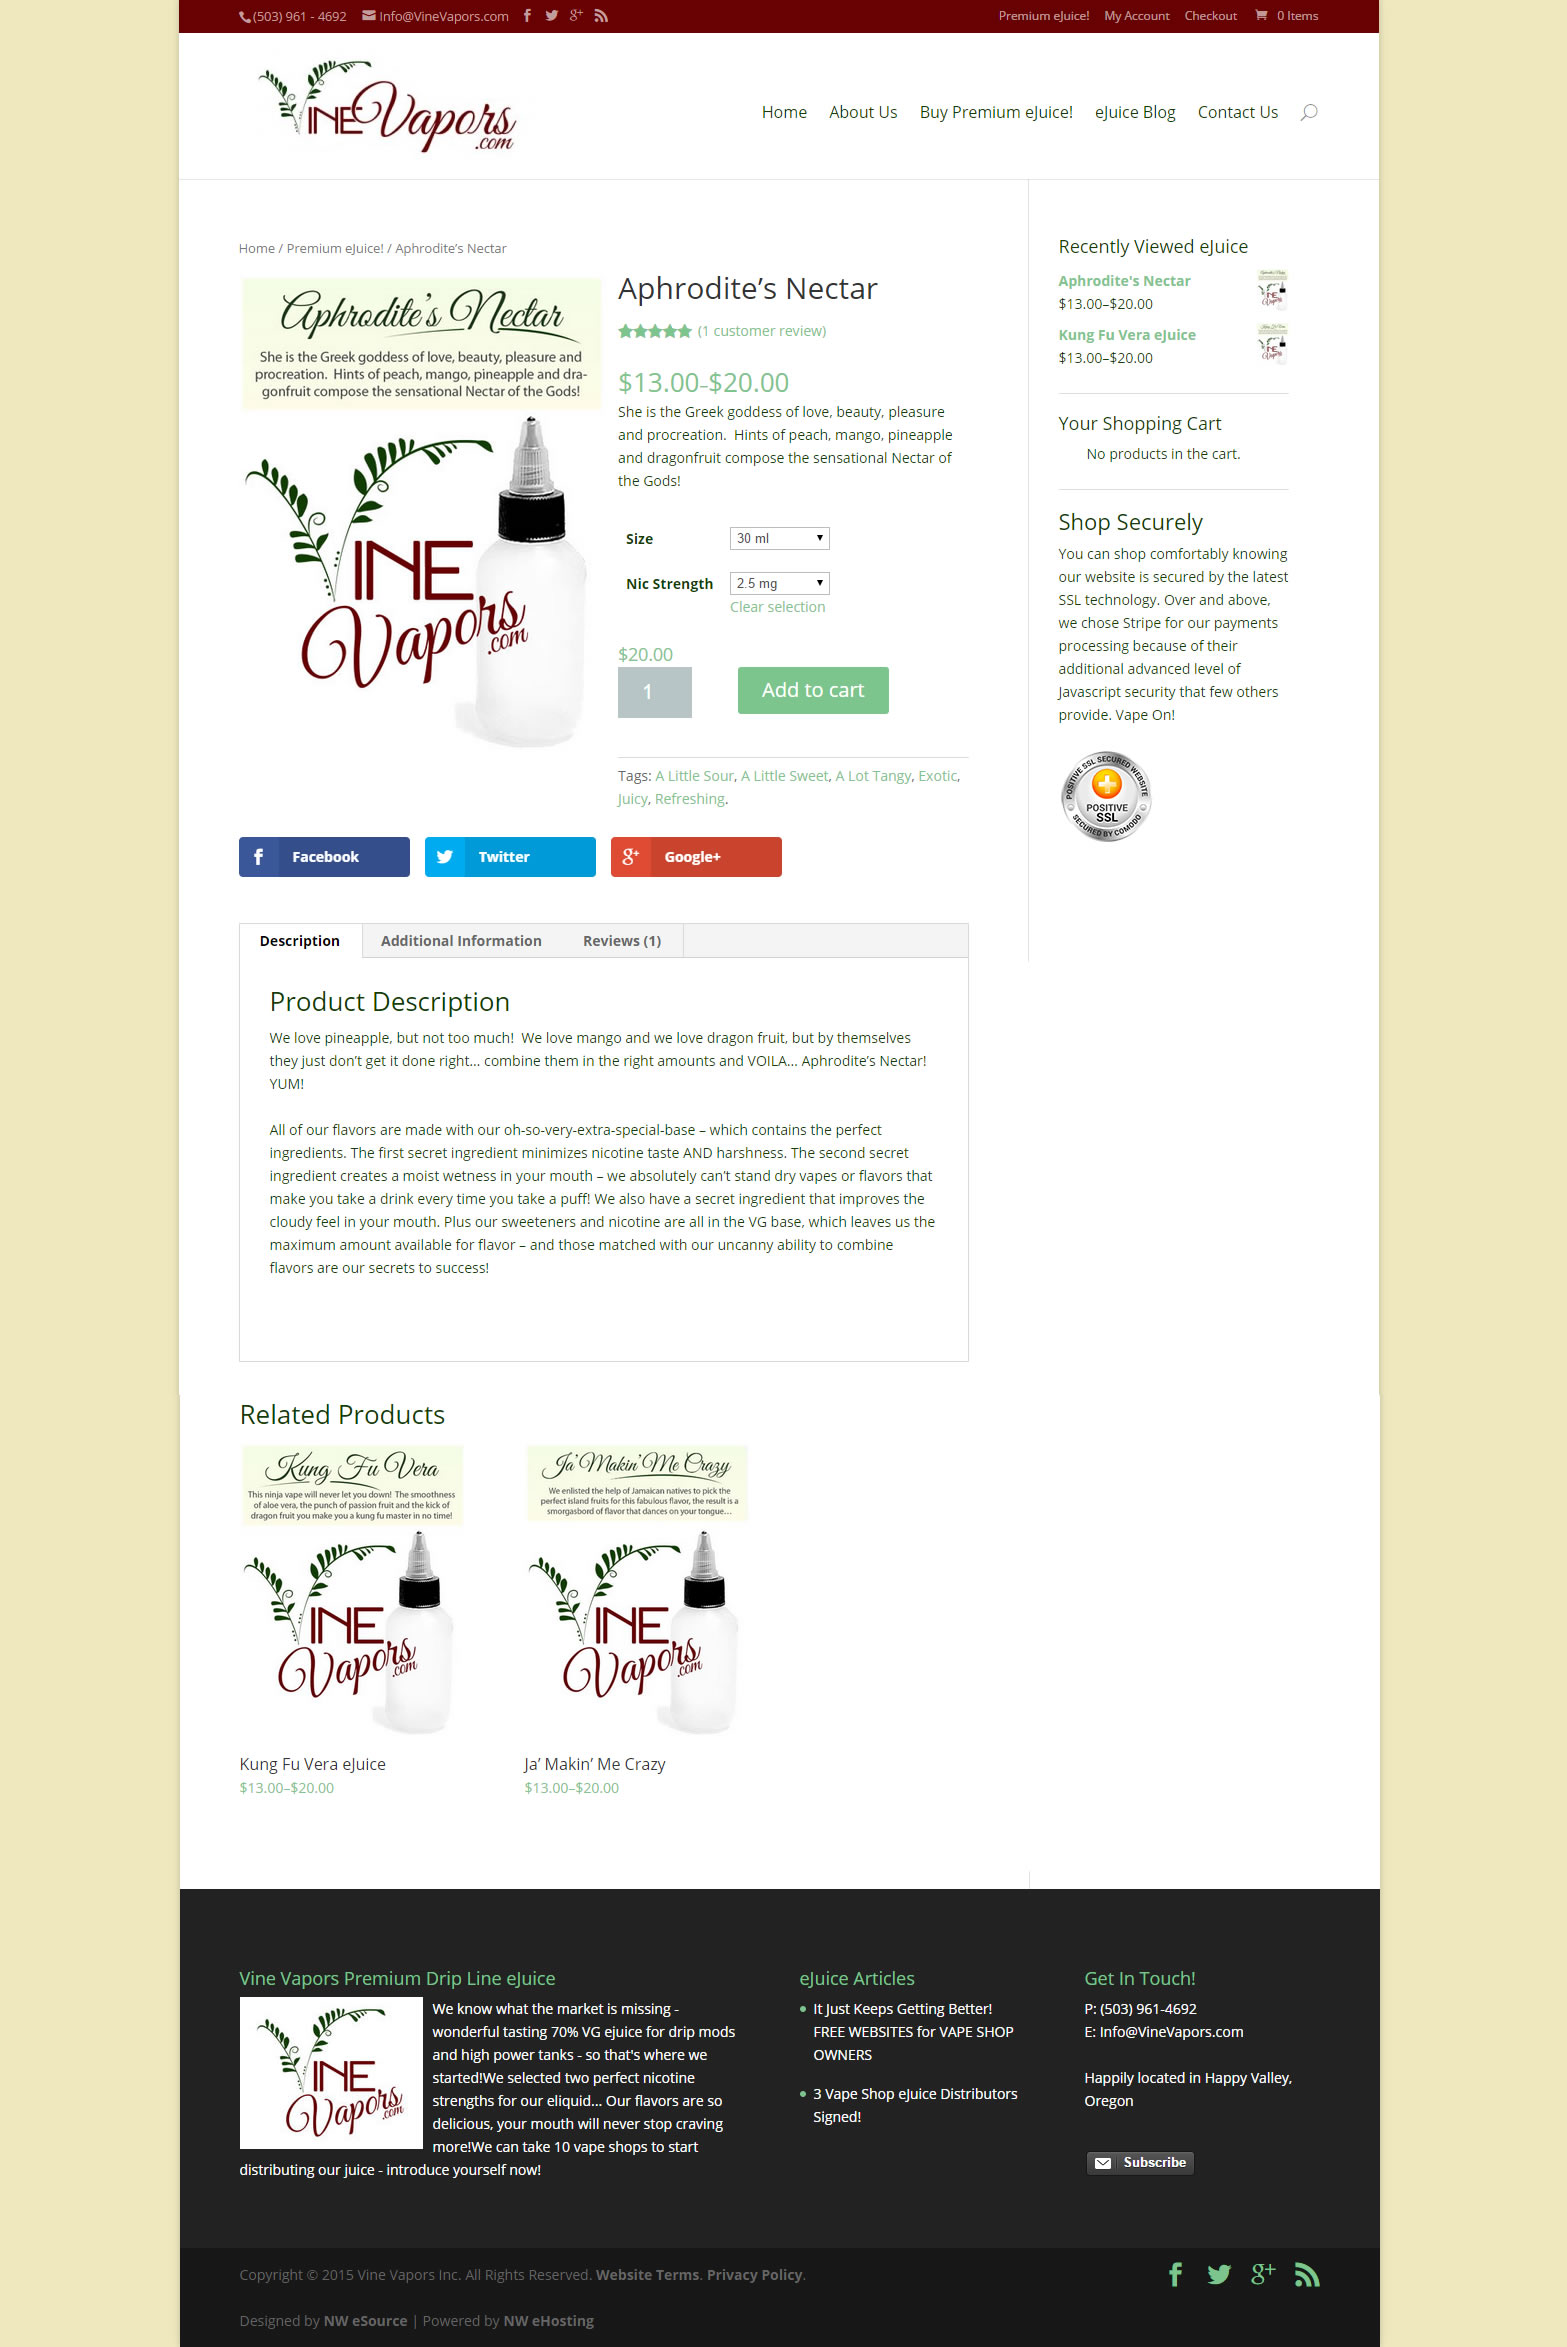 Vine Vapors – Responsive eCommerce Website Complete!